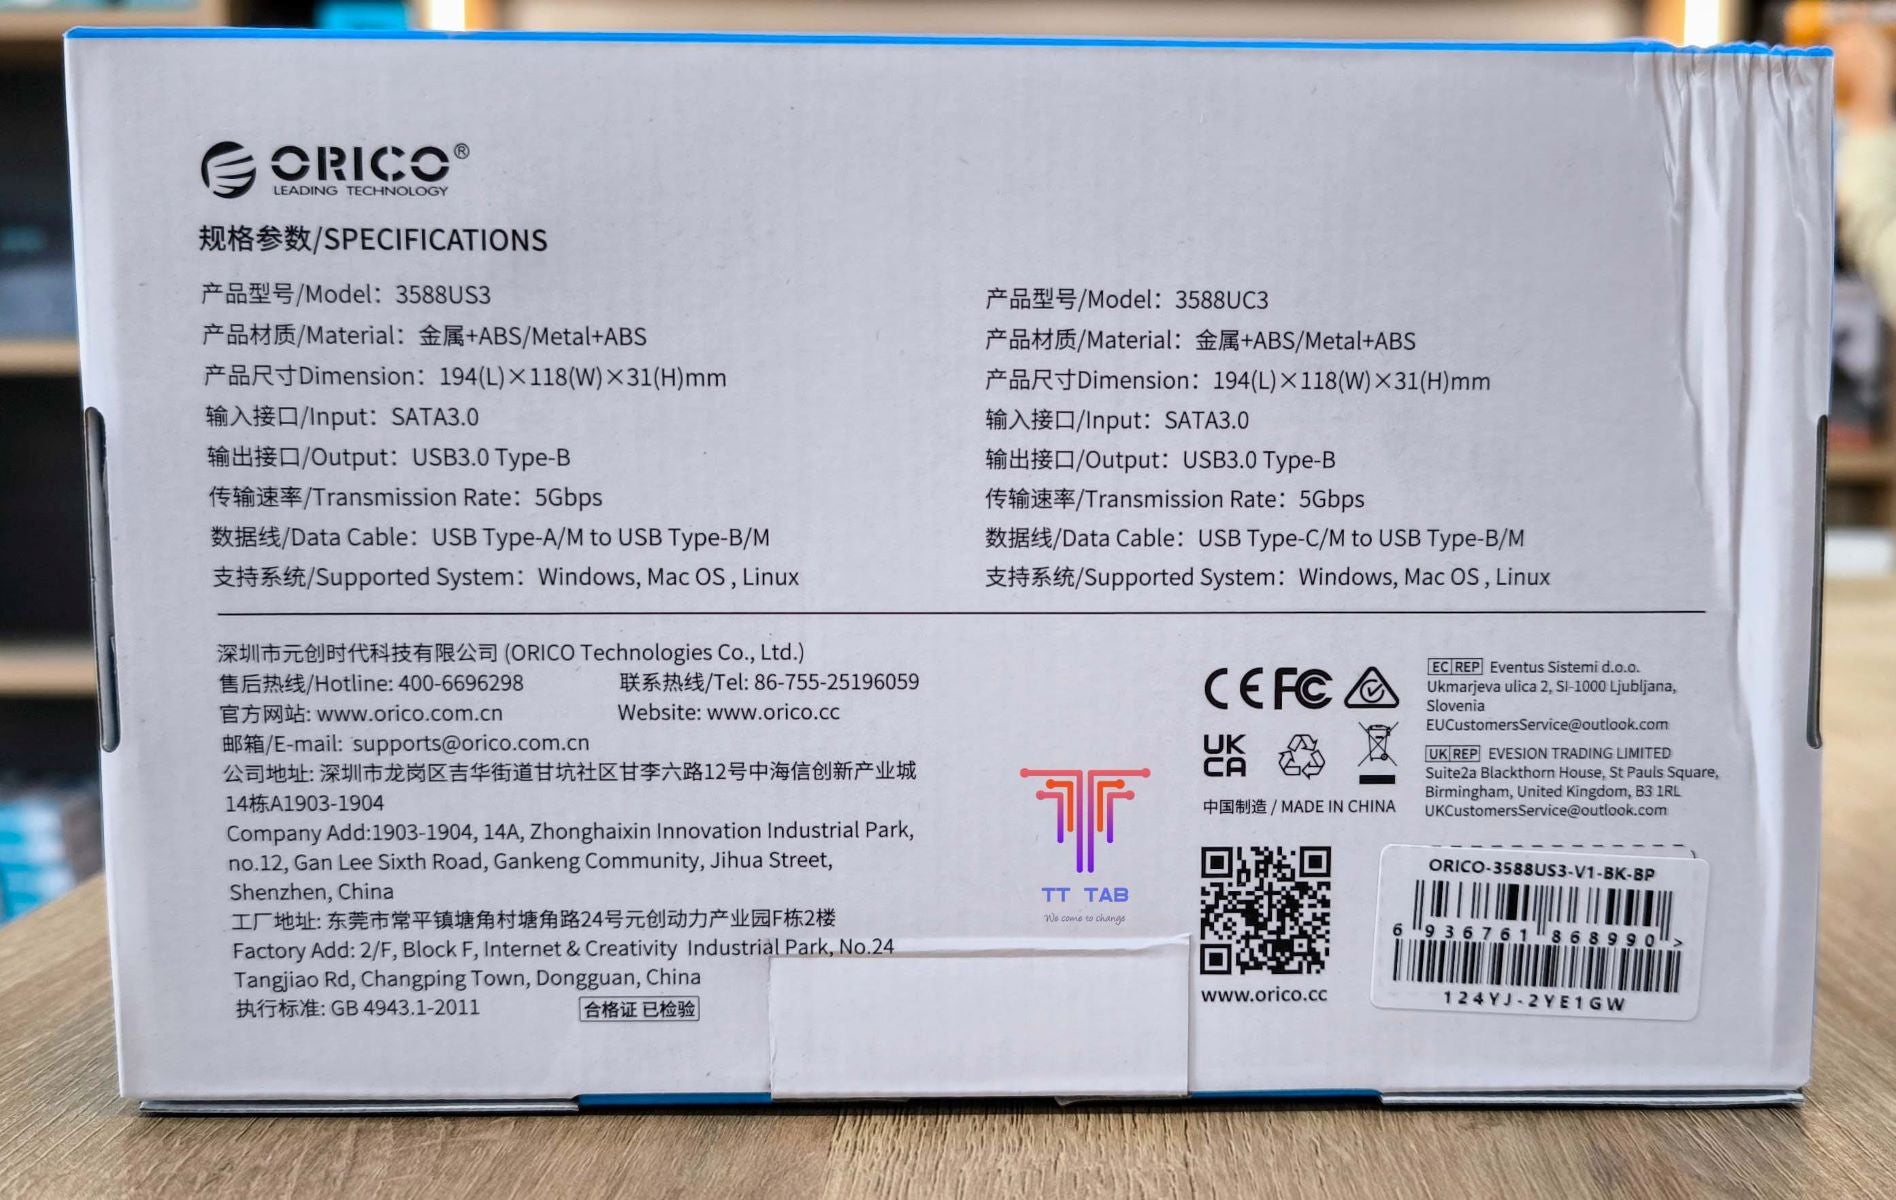 Orico 3588US3-V1 SATA 3.5 Enclosure